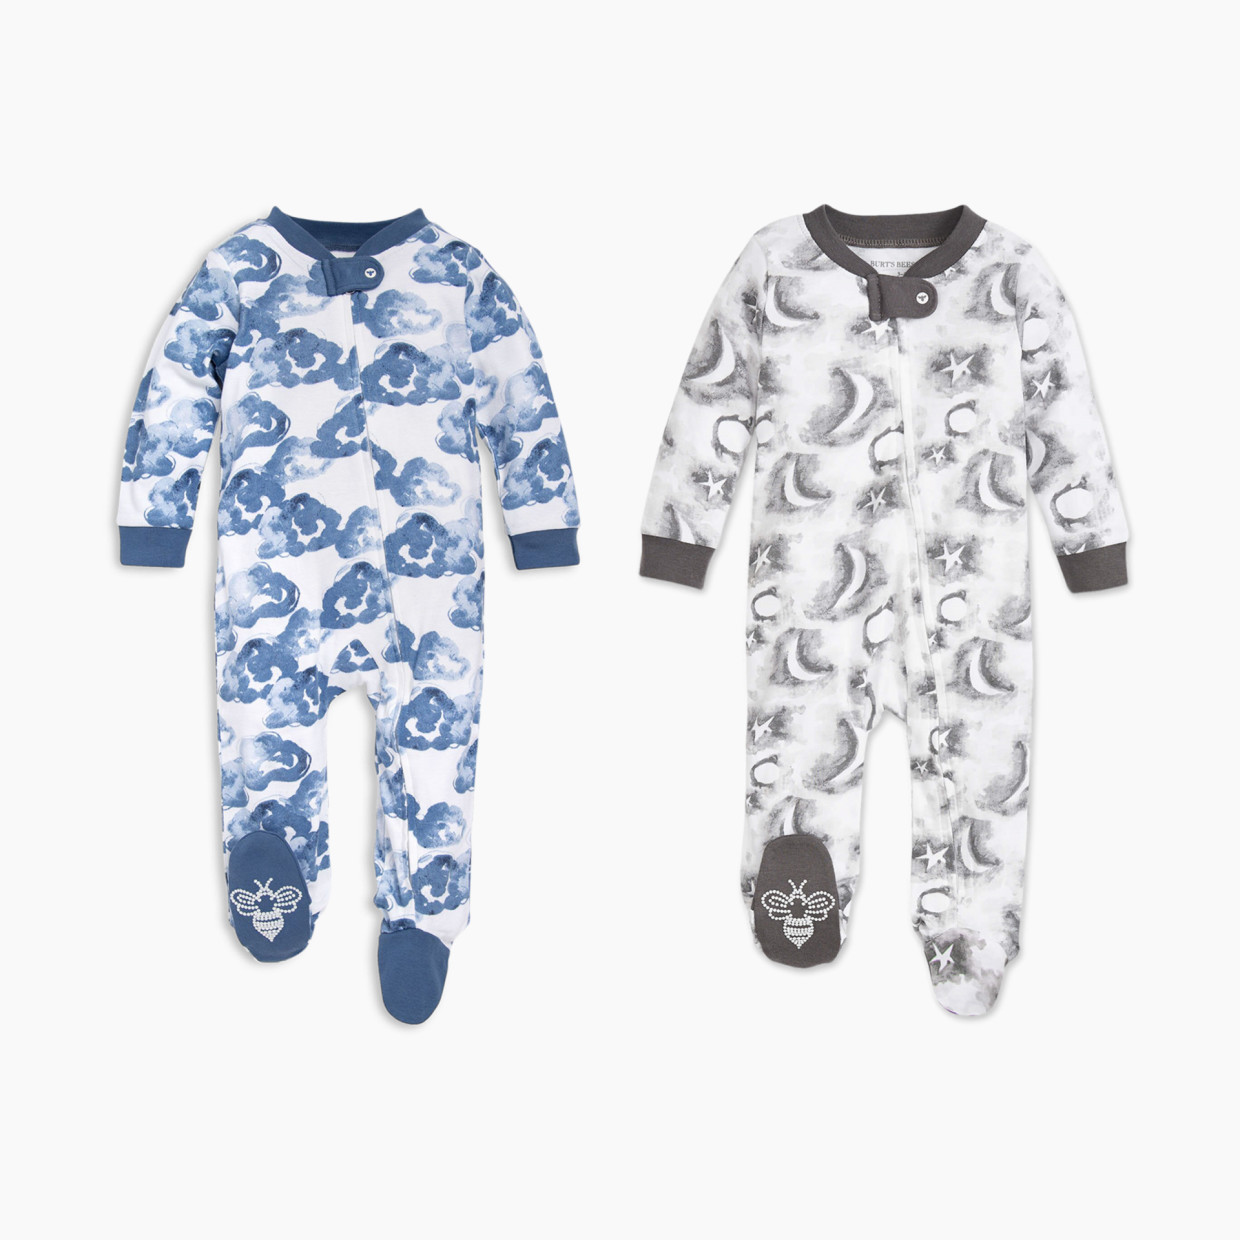 Burt's Bees Baby Organic Sleep & Play Footie Pajamas Bundle - Blue, 0-3 Months.